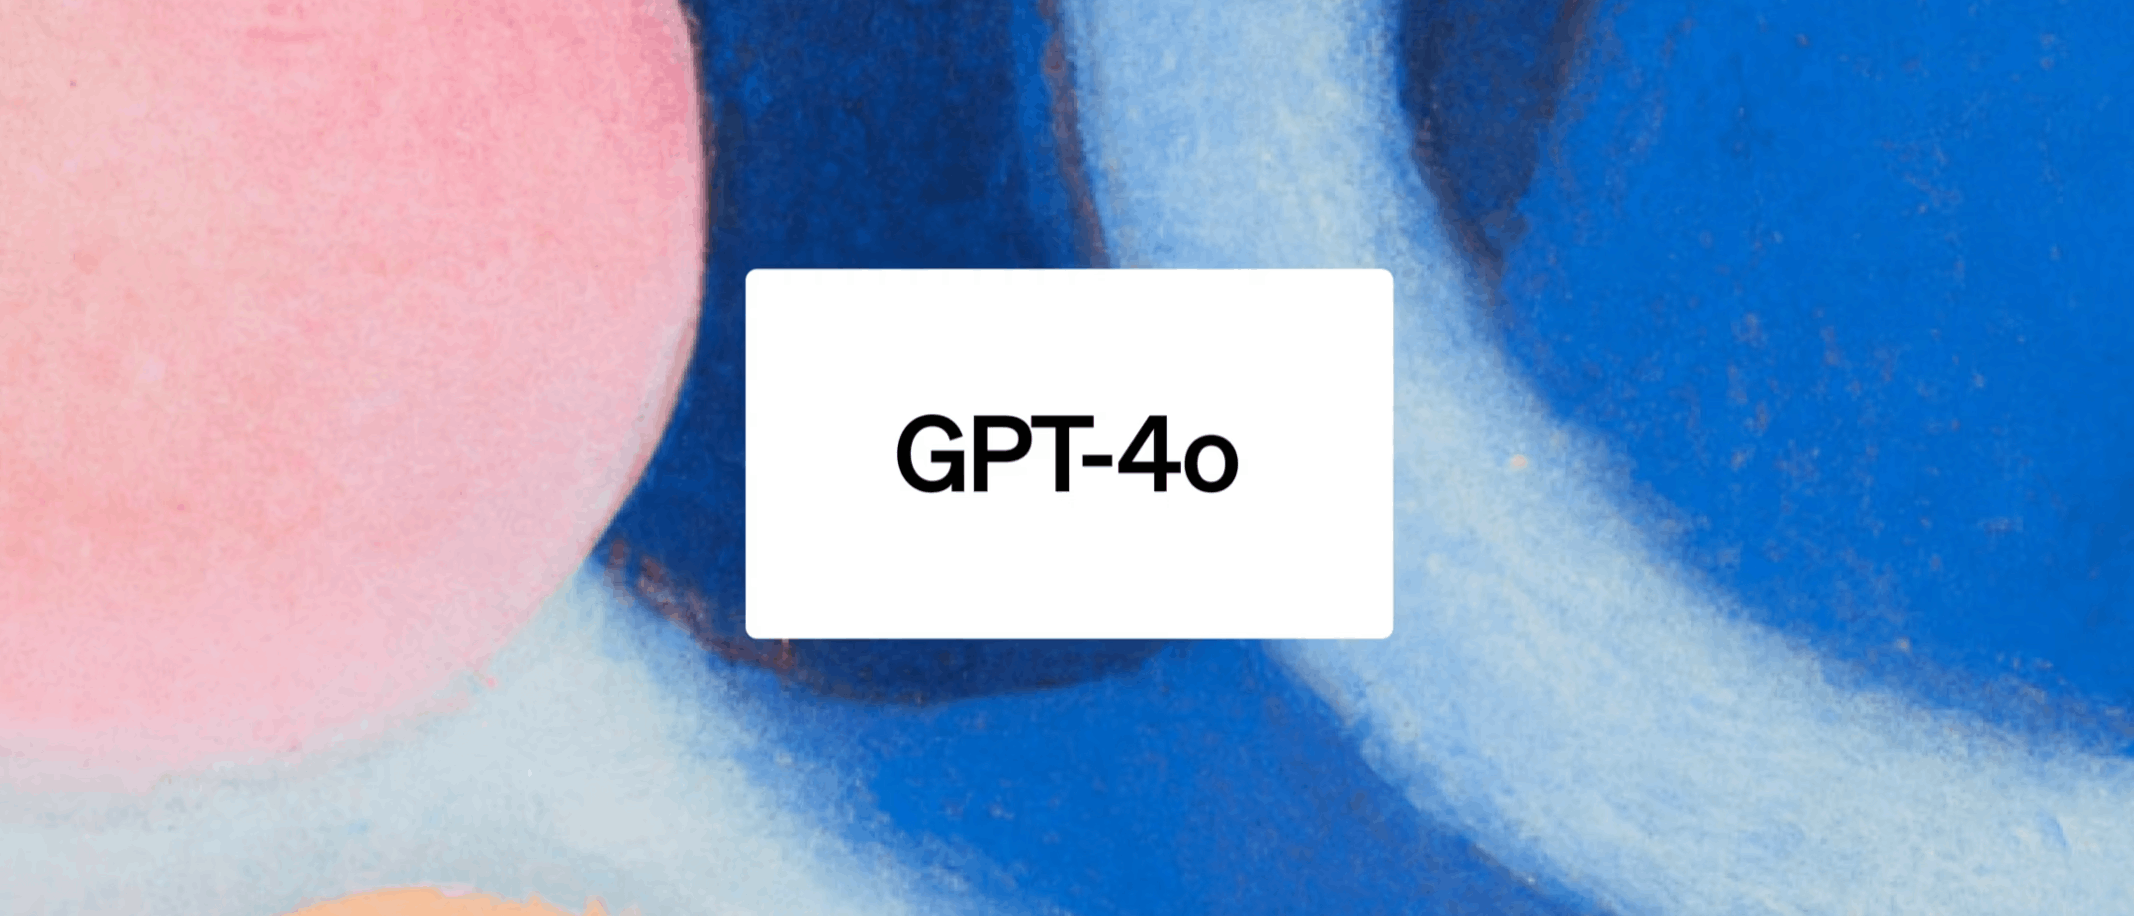 OpenAI 宣布将推出新的旗舰模型 GPT-4o 